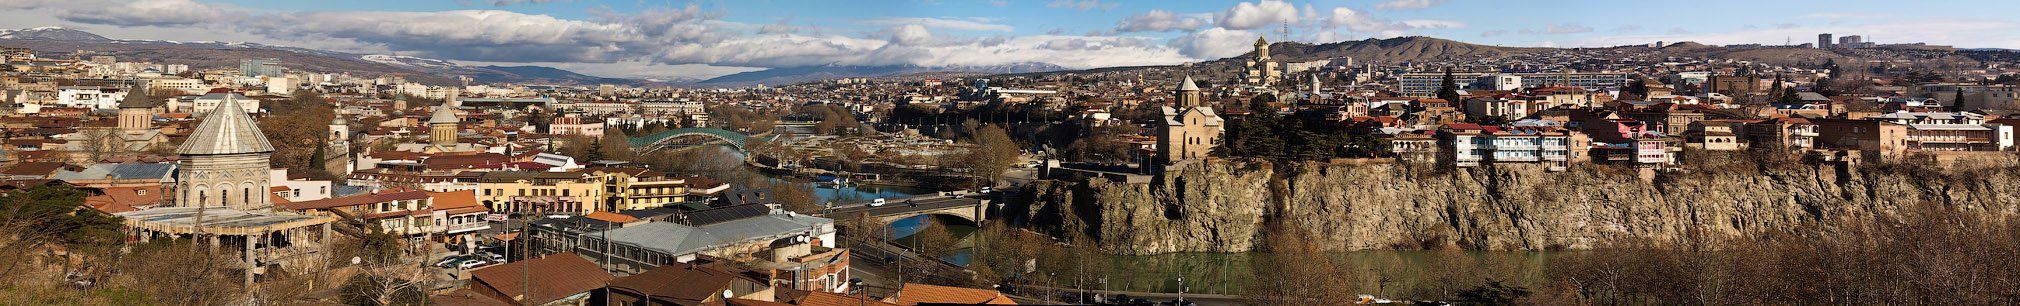 грузия, тбилиси, панорама, Артем Верхогляд